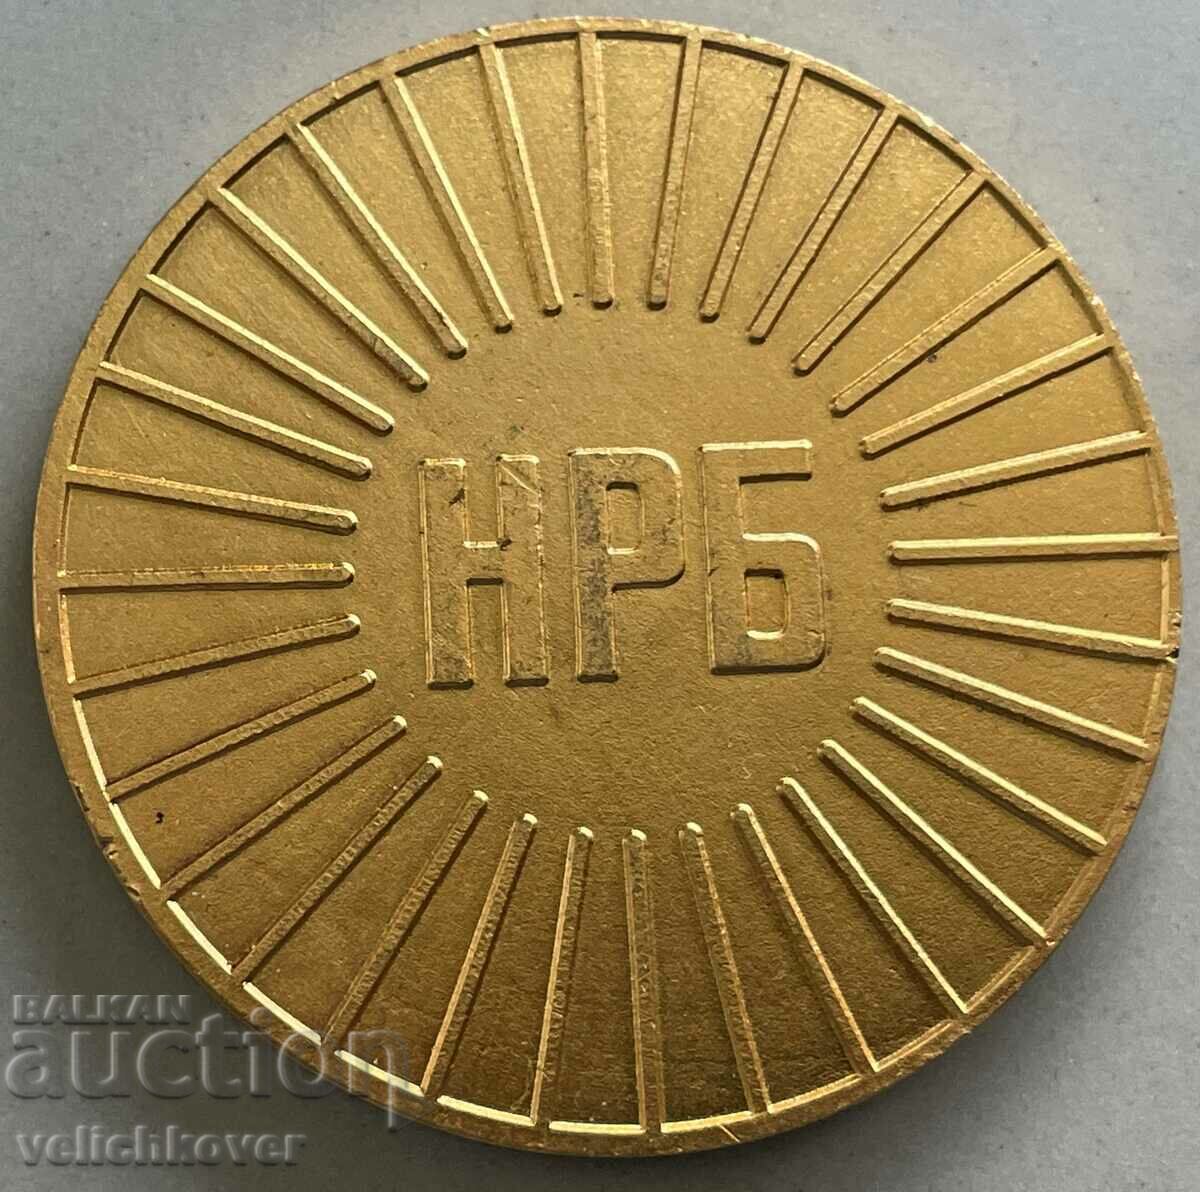 33011 Bulgaria Golden Master of Sports award plaque